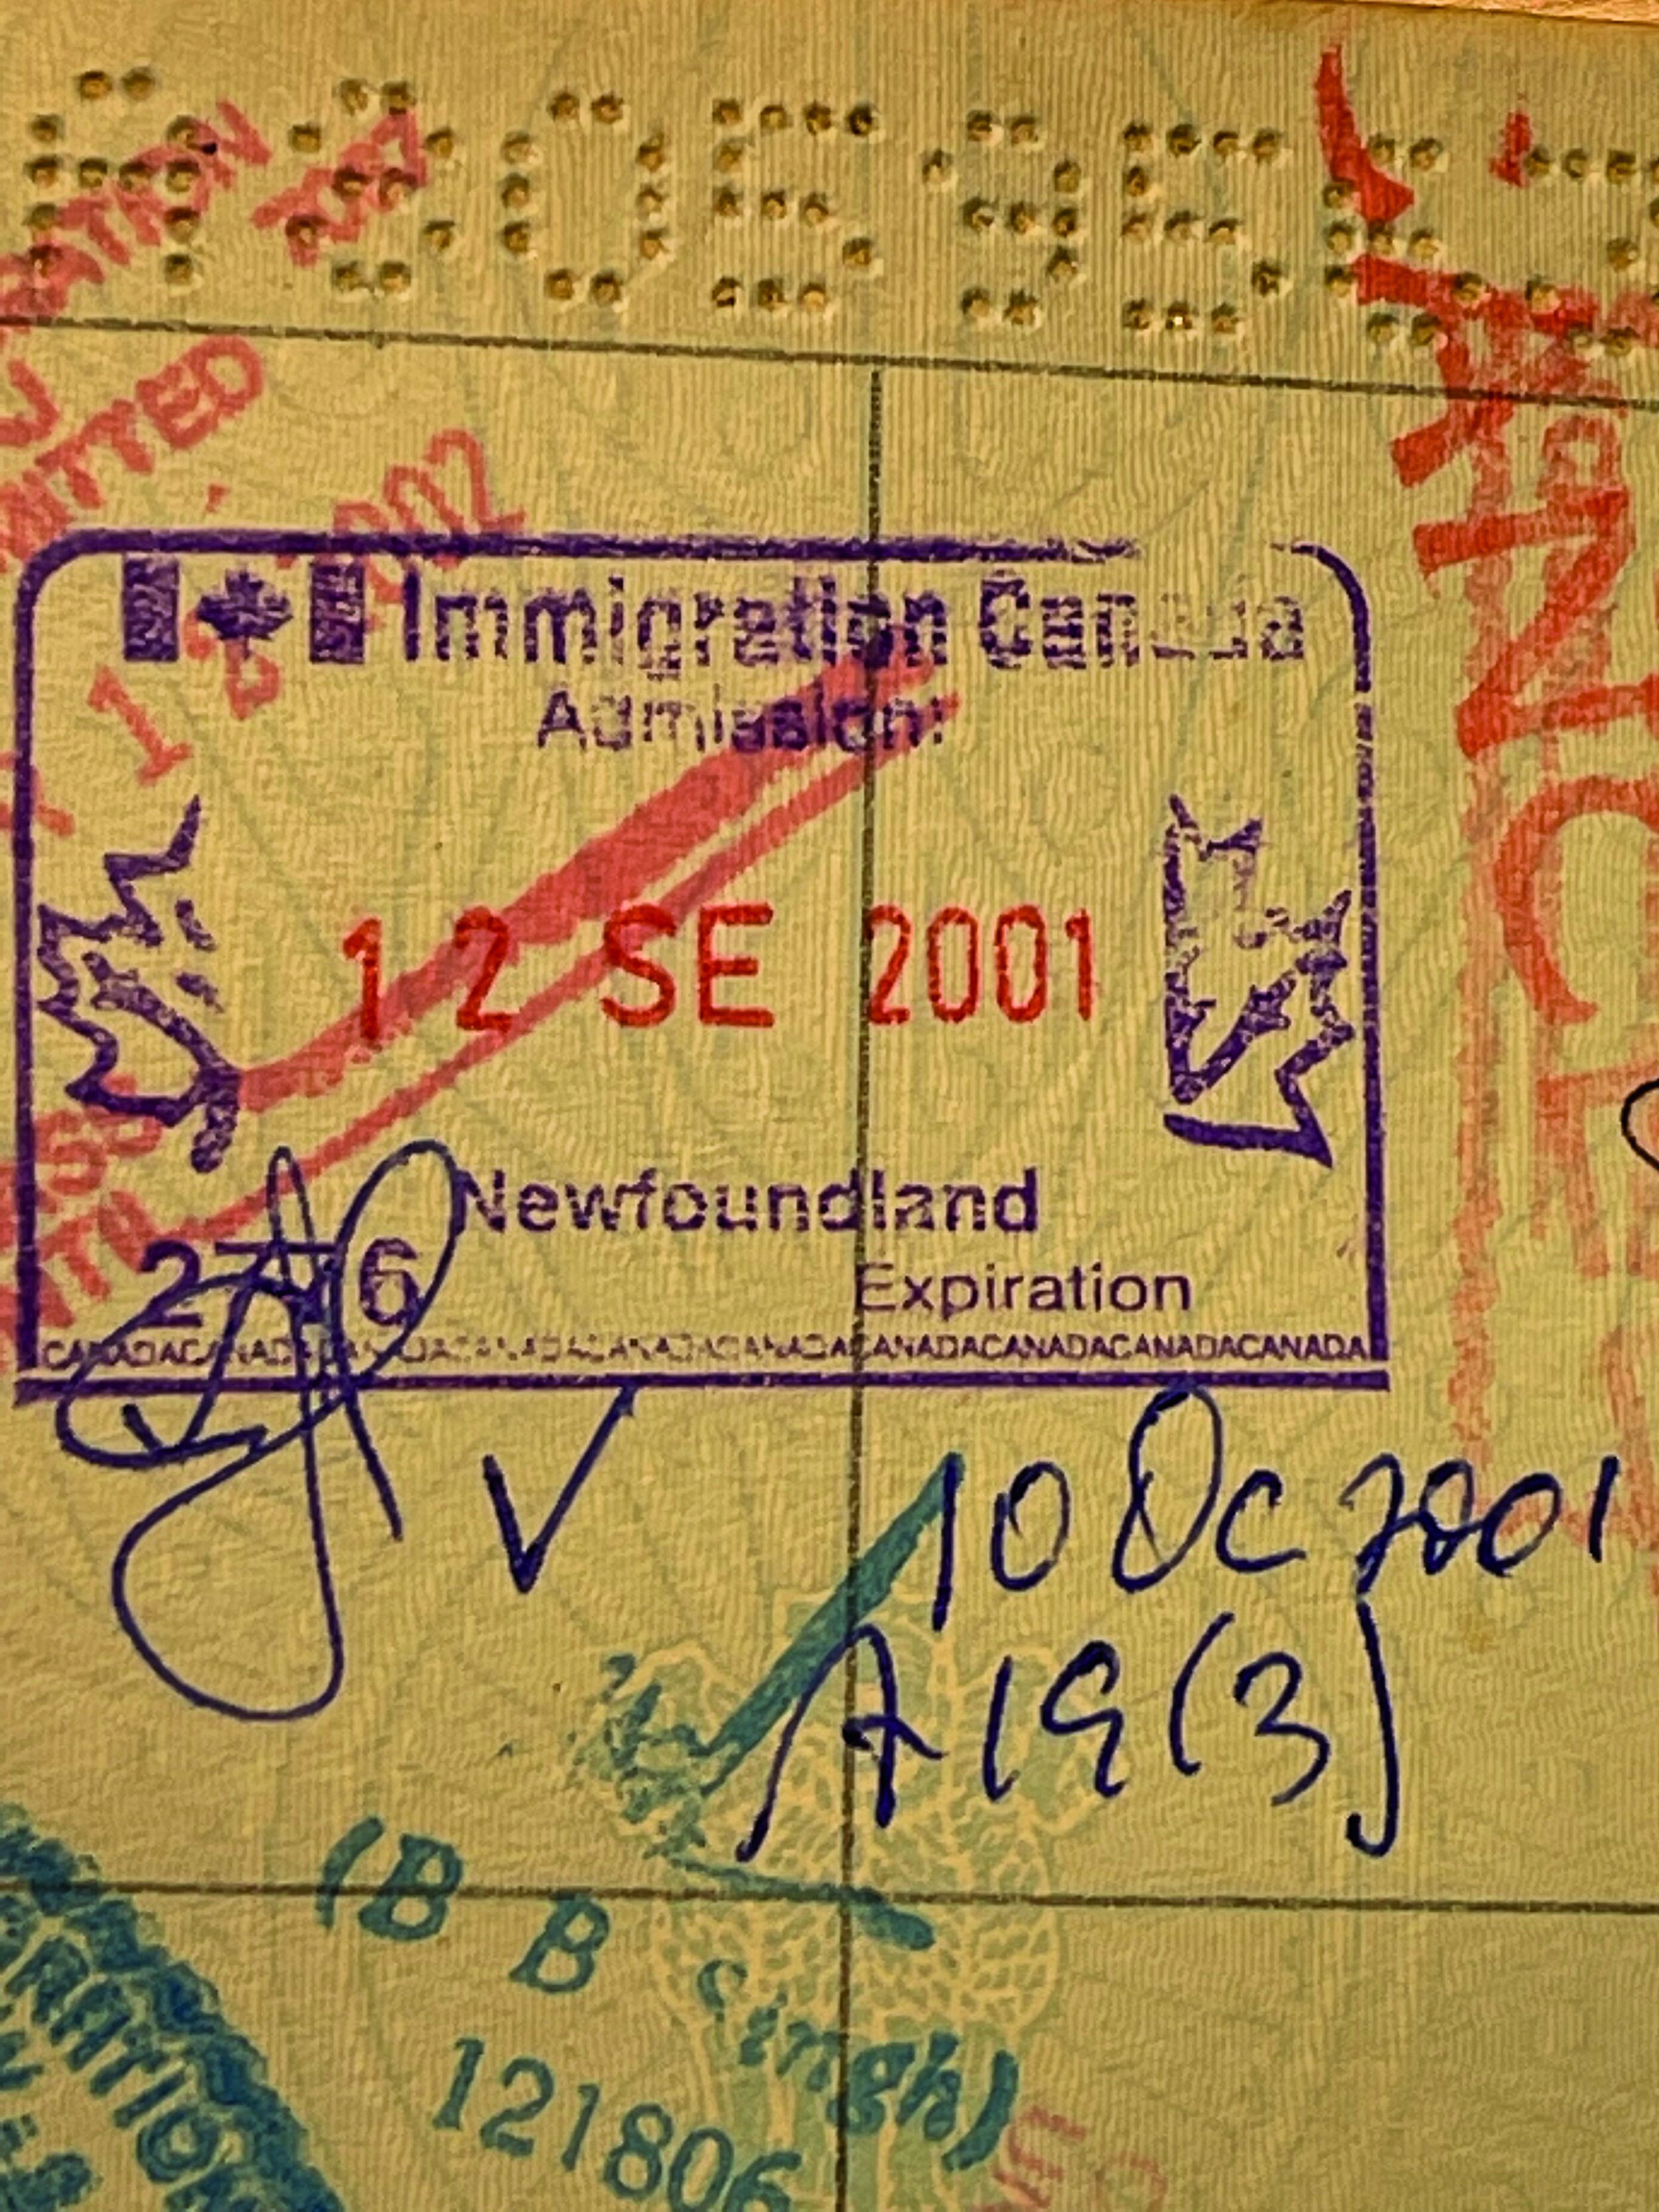  Garg’s passport marking entry into Newfoundland 